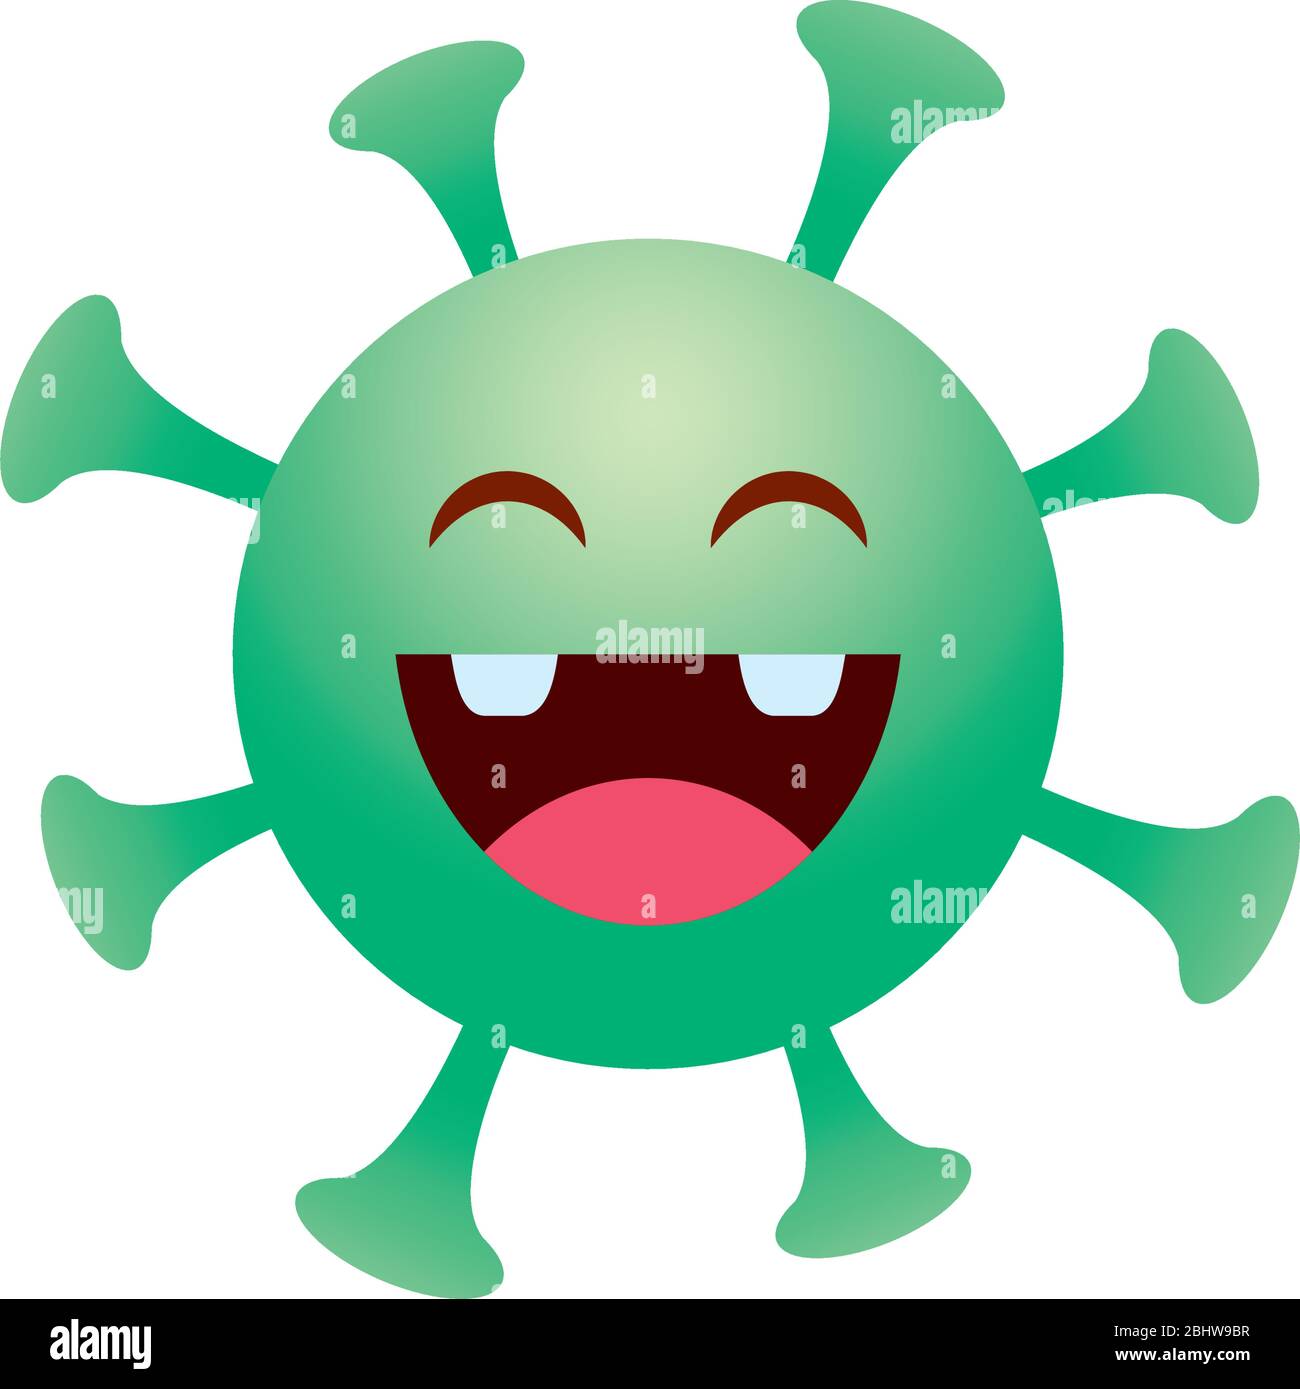 emoji-covid-19-concept-emoji-coronavirus-virus-smiling-icon-over-white-background-gradient-style-vector-illustration-2BHW9BR.jpg